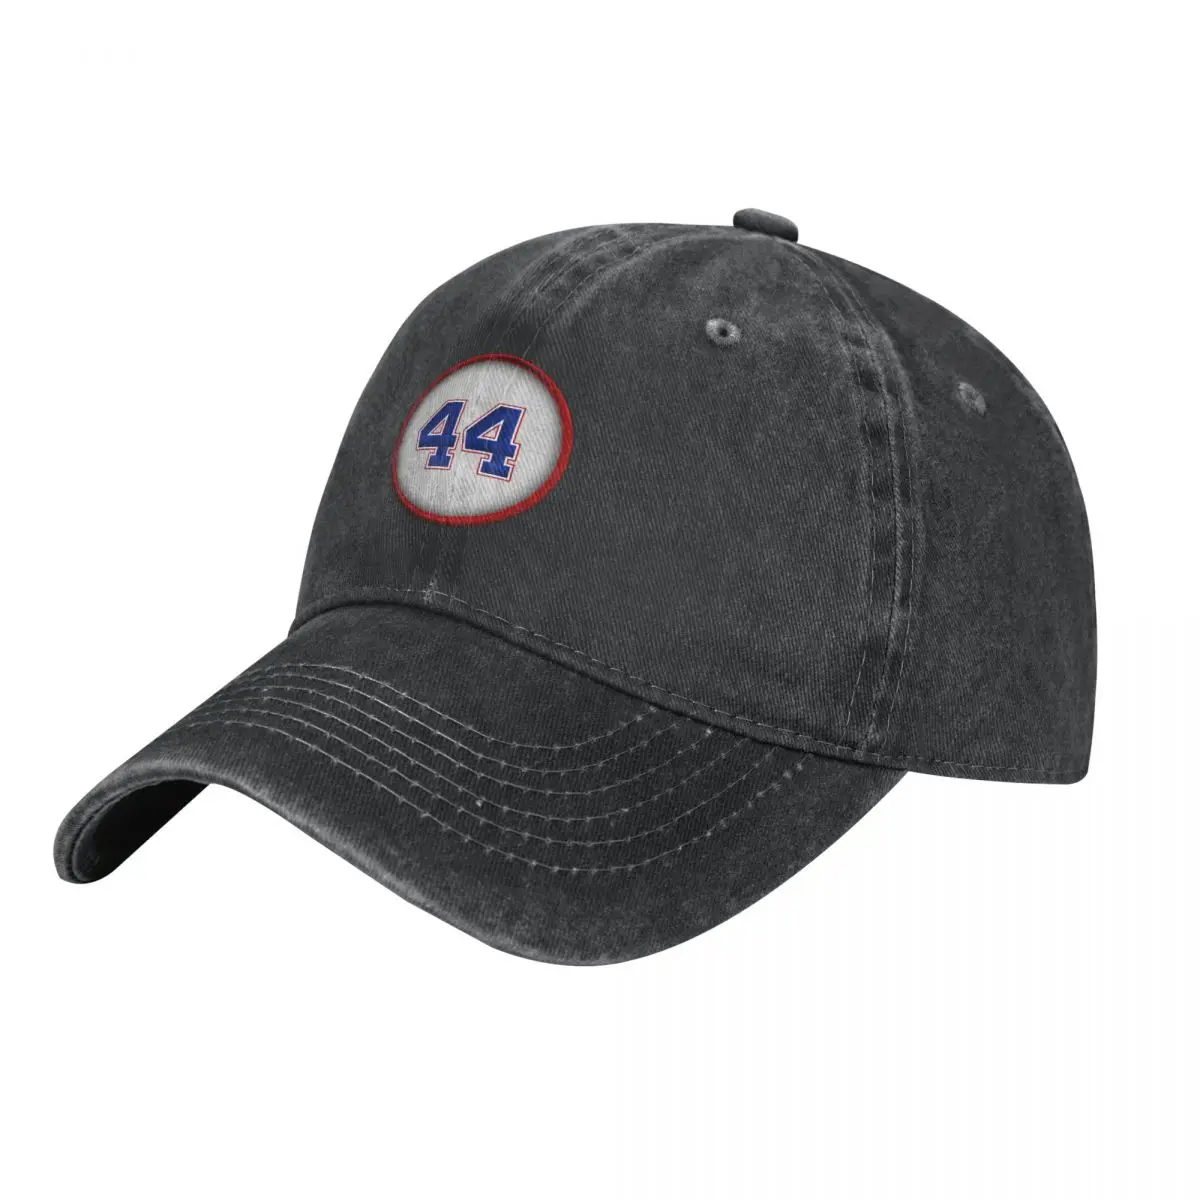 

44 - Hammerin Hank (1974) Cowboy Hat black Designer Hat Snapback Cap Military Cap Man Women's Golf Wear Men's